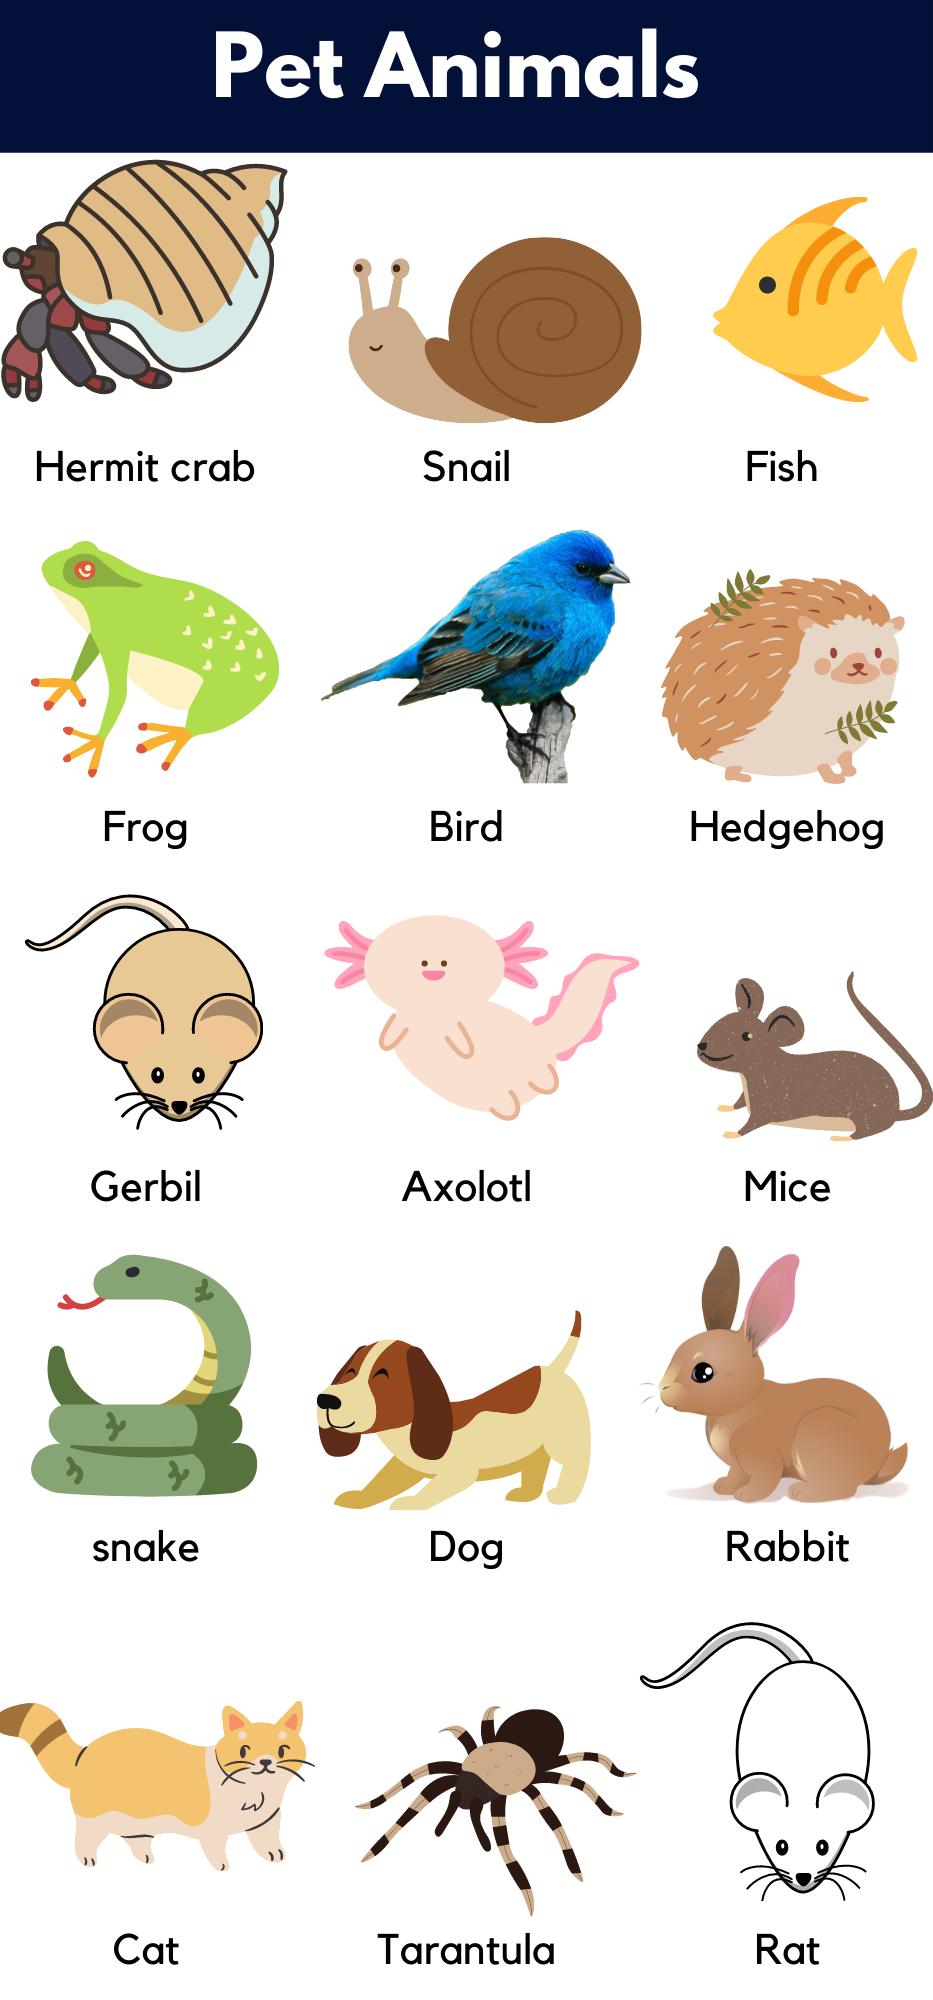 Pet Animals Name